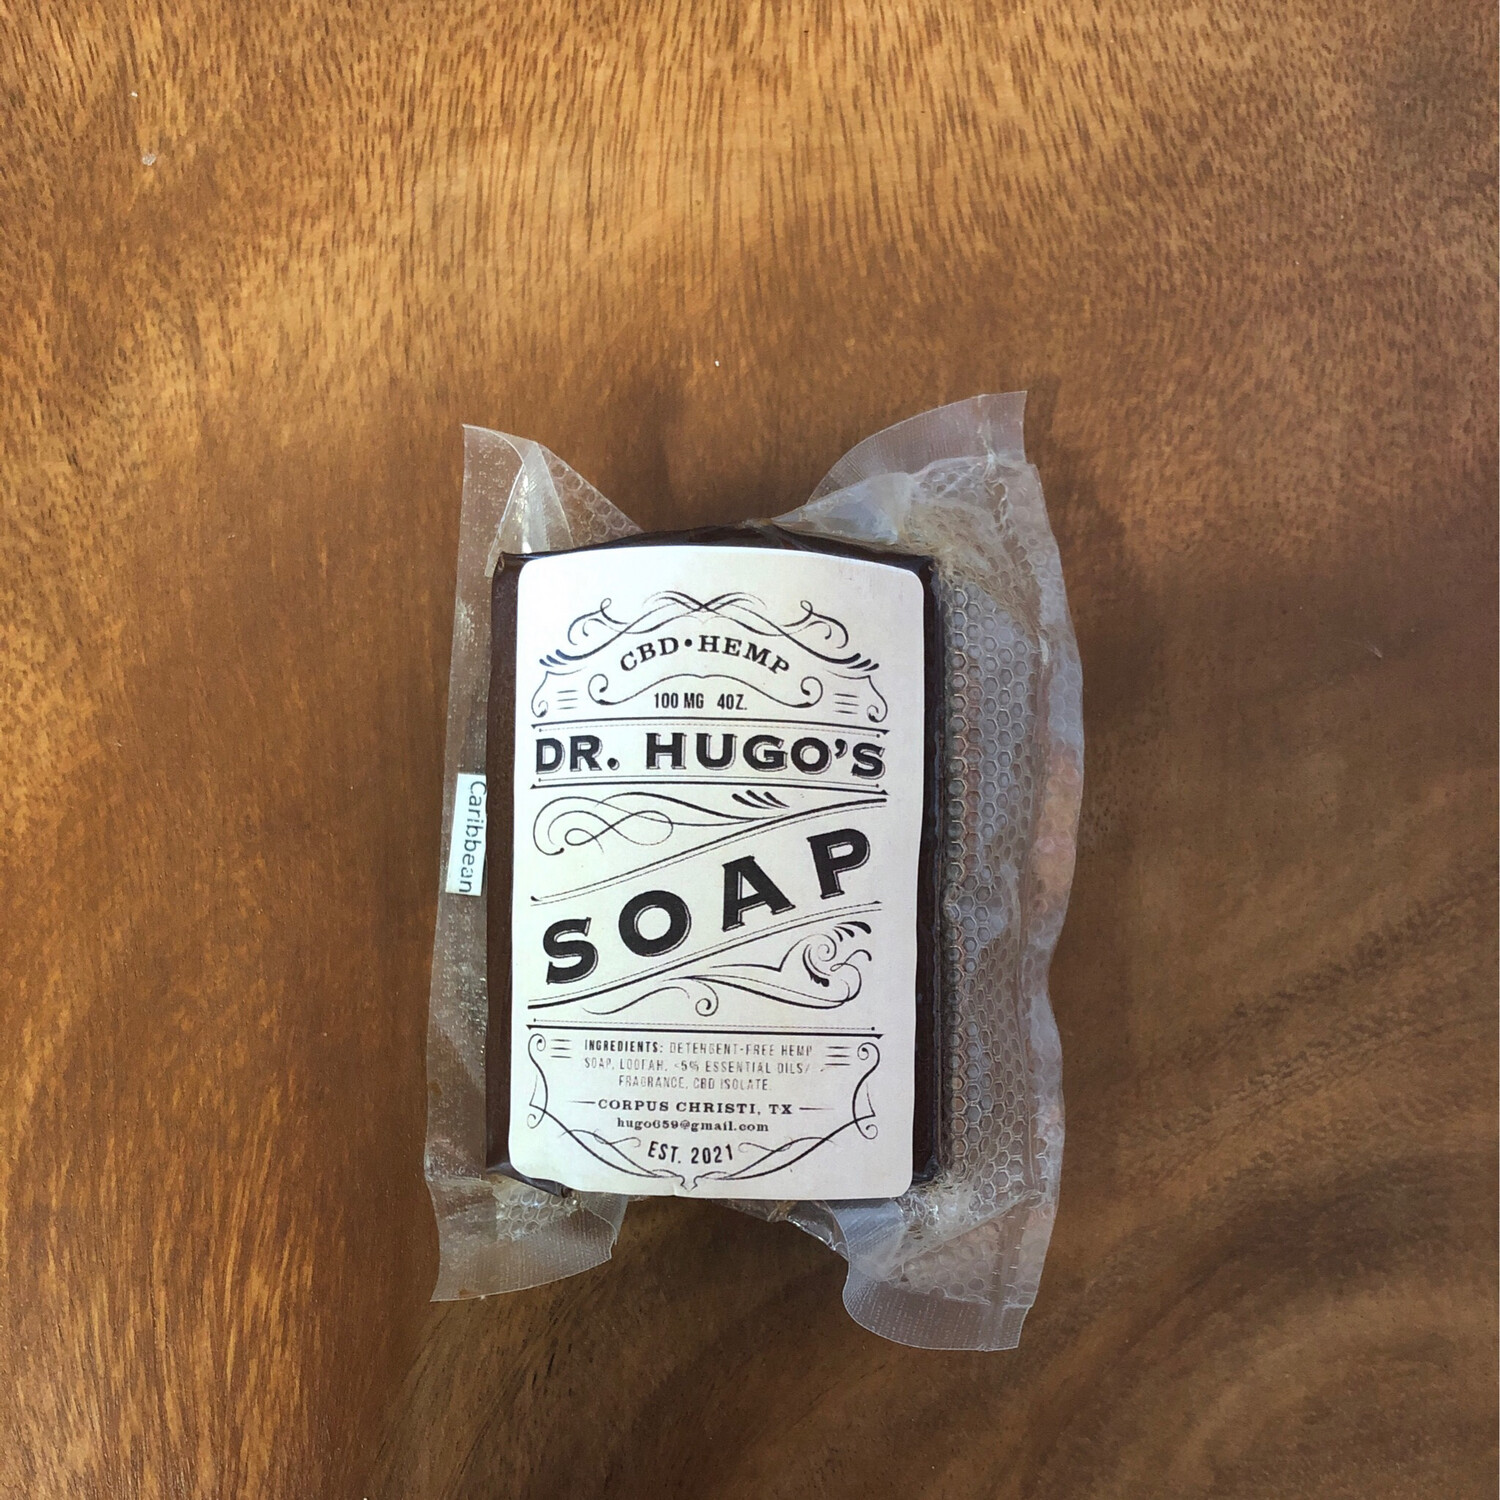 Dr. Hugo's Soap